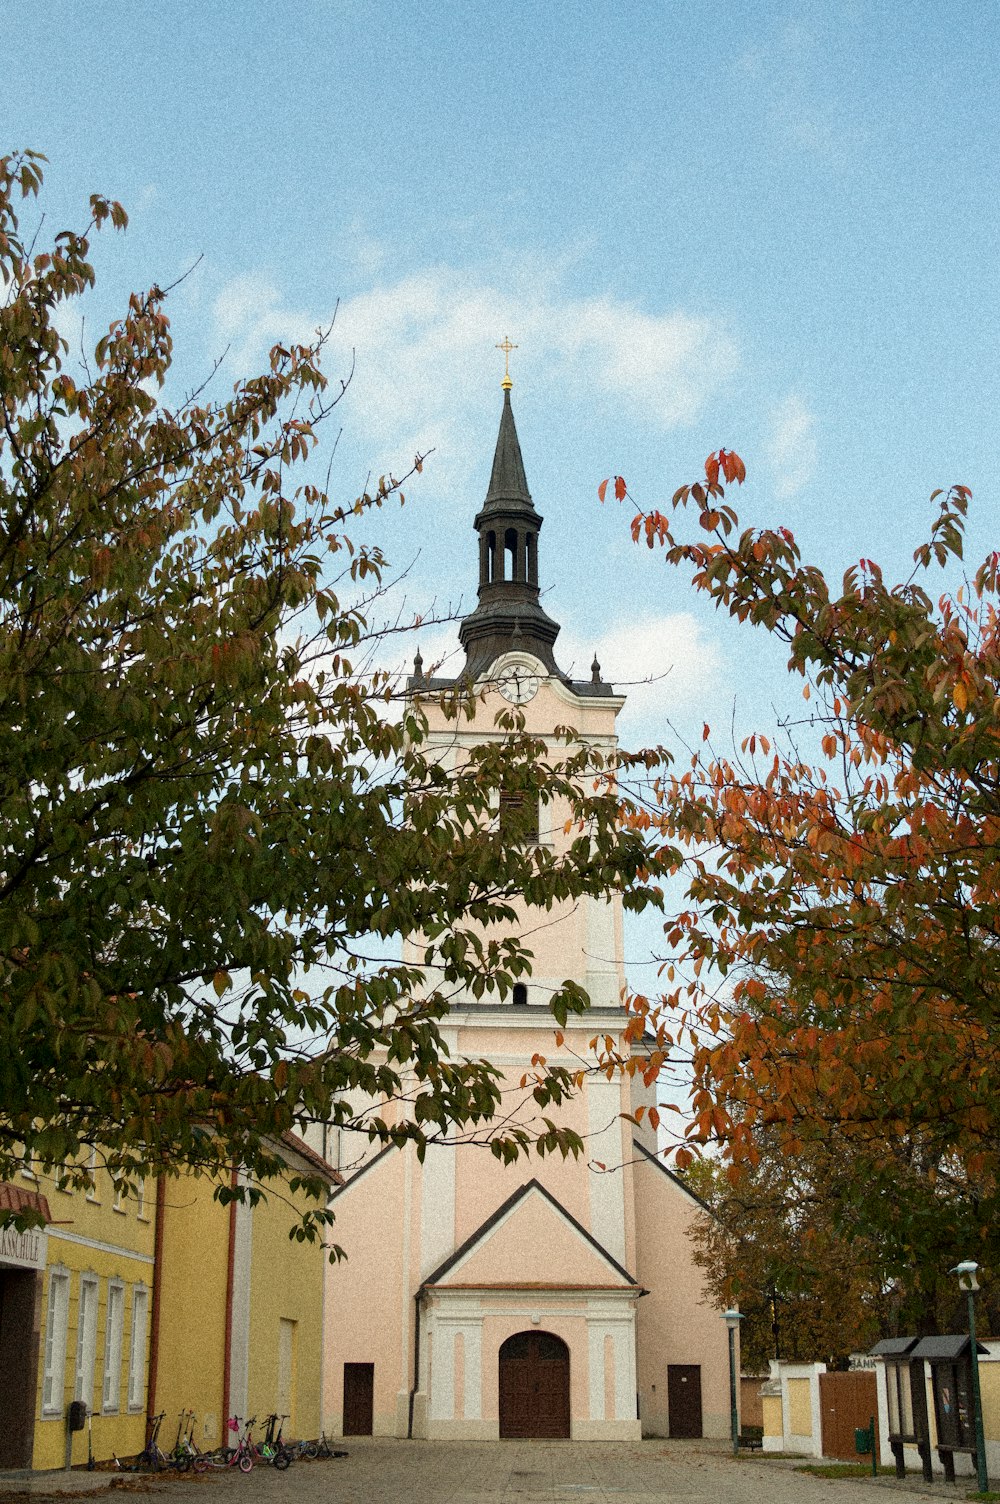 a church with a steeple